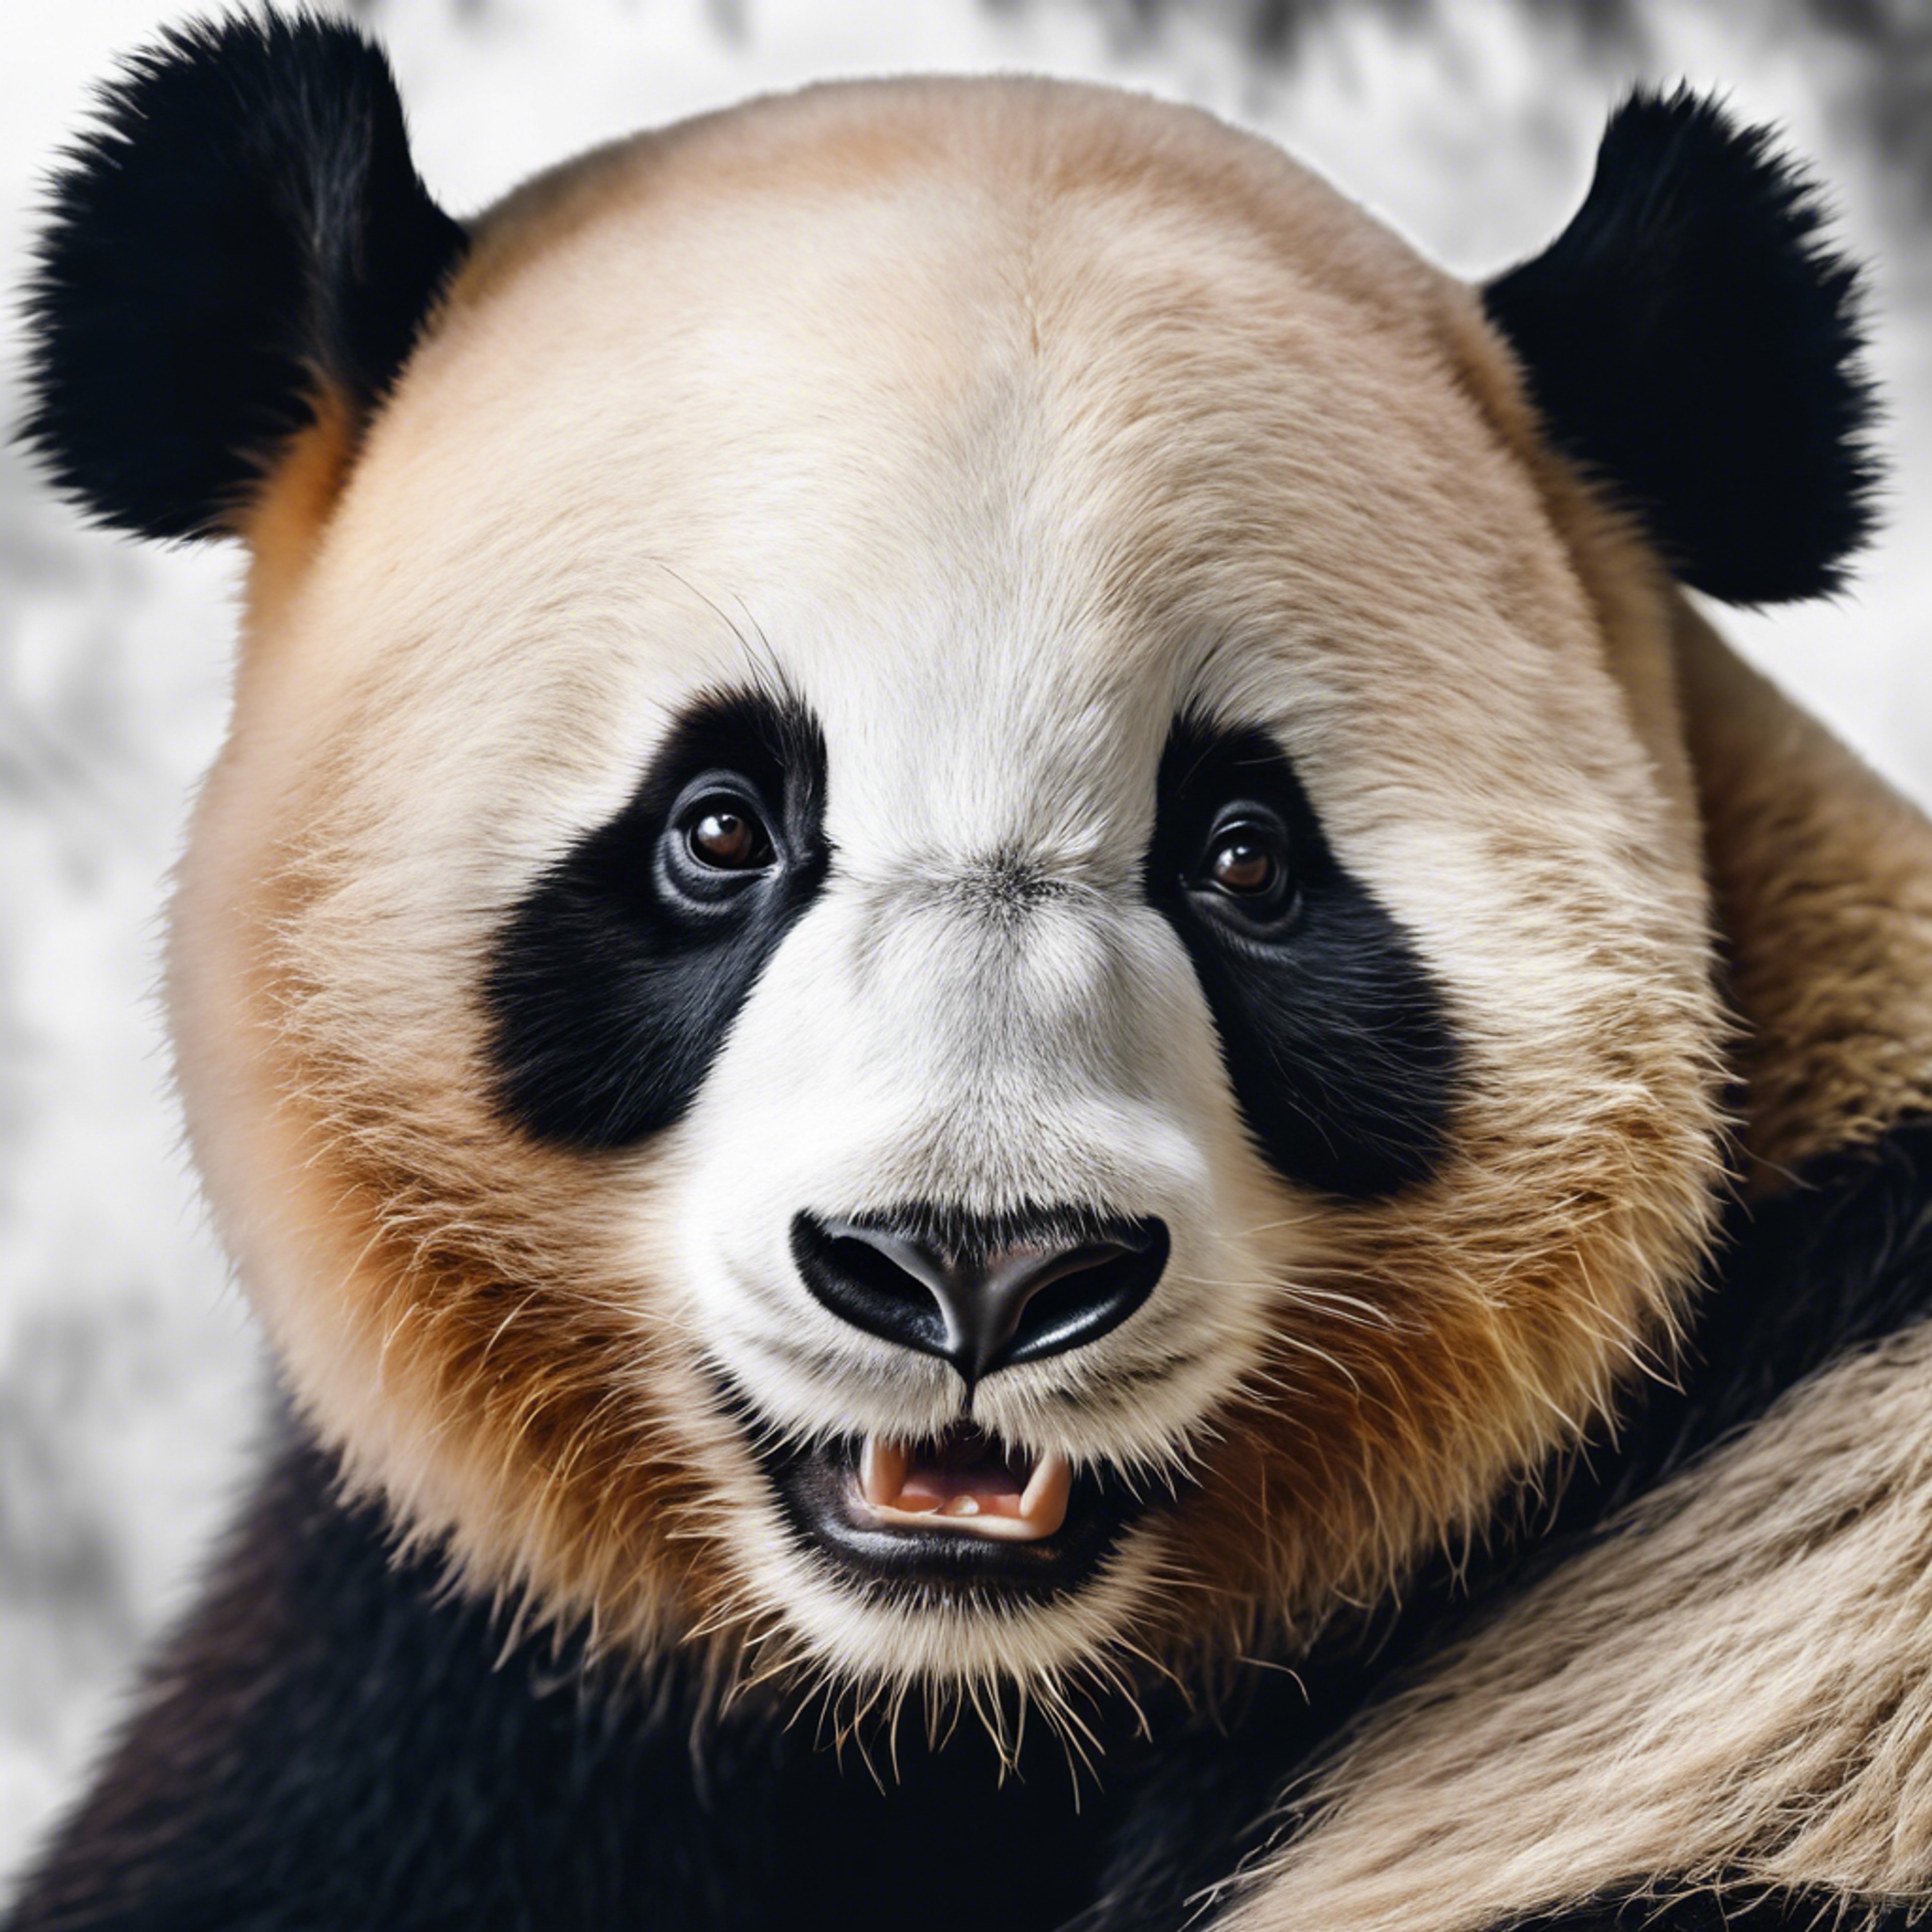 A close-up portrait of a smiling panda, showcasing the joy and charm of this magnificent creature. Fondo de pantalla[5b22781787714e61bfbc]